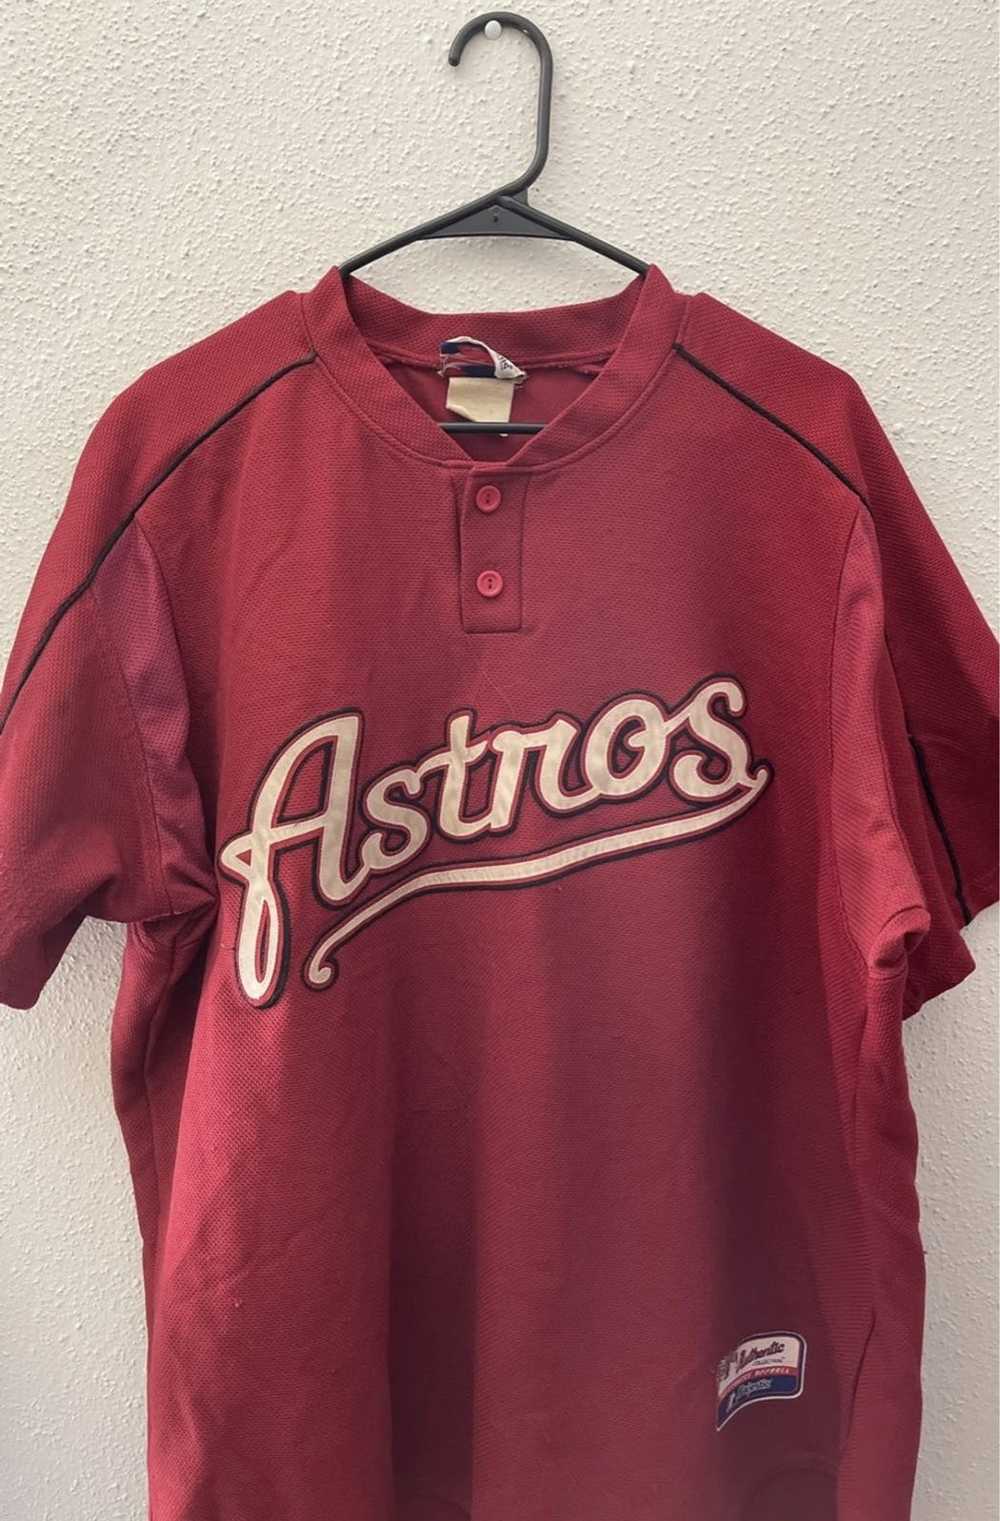 Majestic Vintage Houston astros jersey - image 1